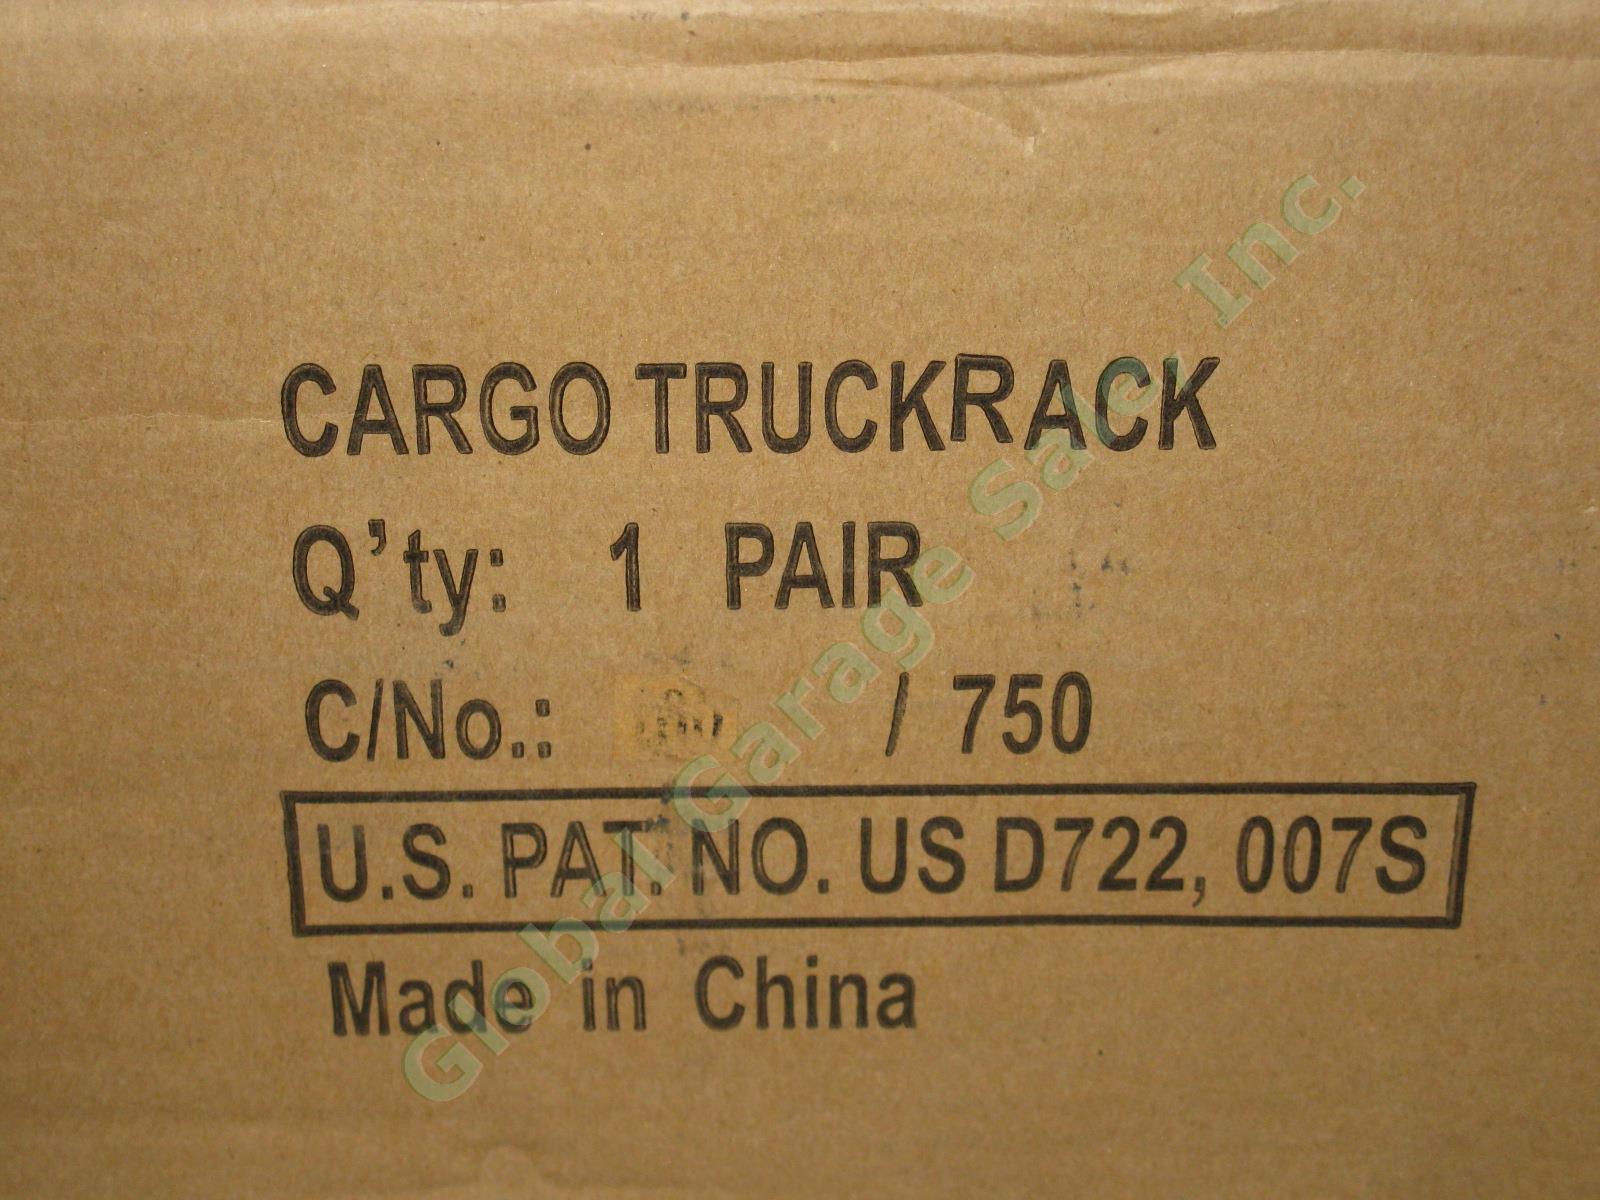 650Lb Cap. Adjustable Fit 2 Bar Utility Ladder Truck PickUp Cargo Rack